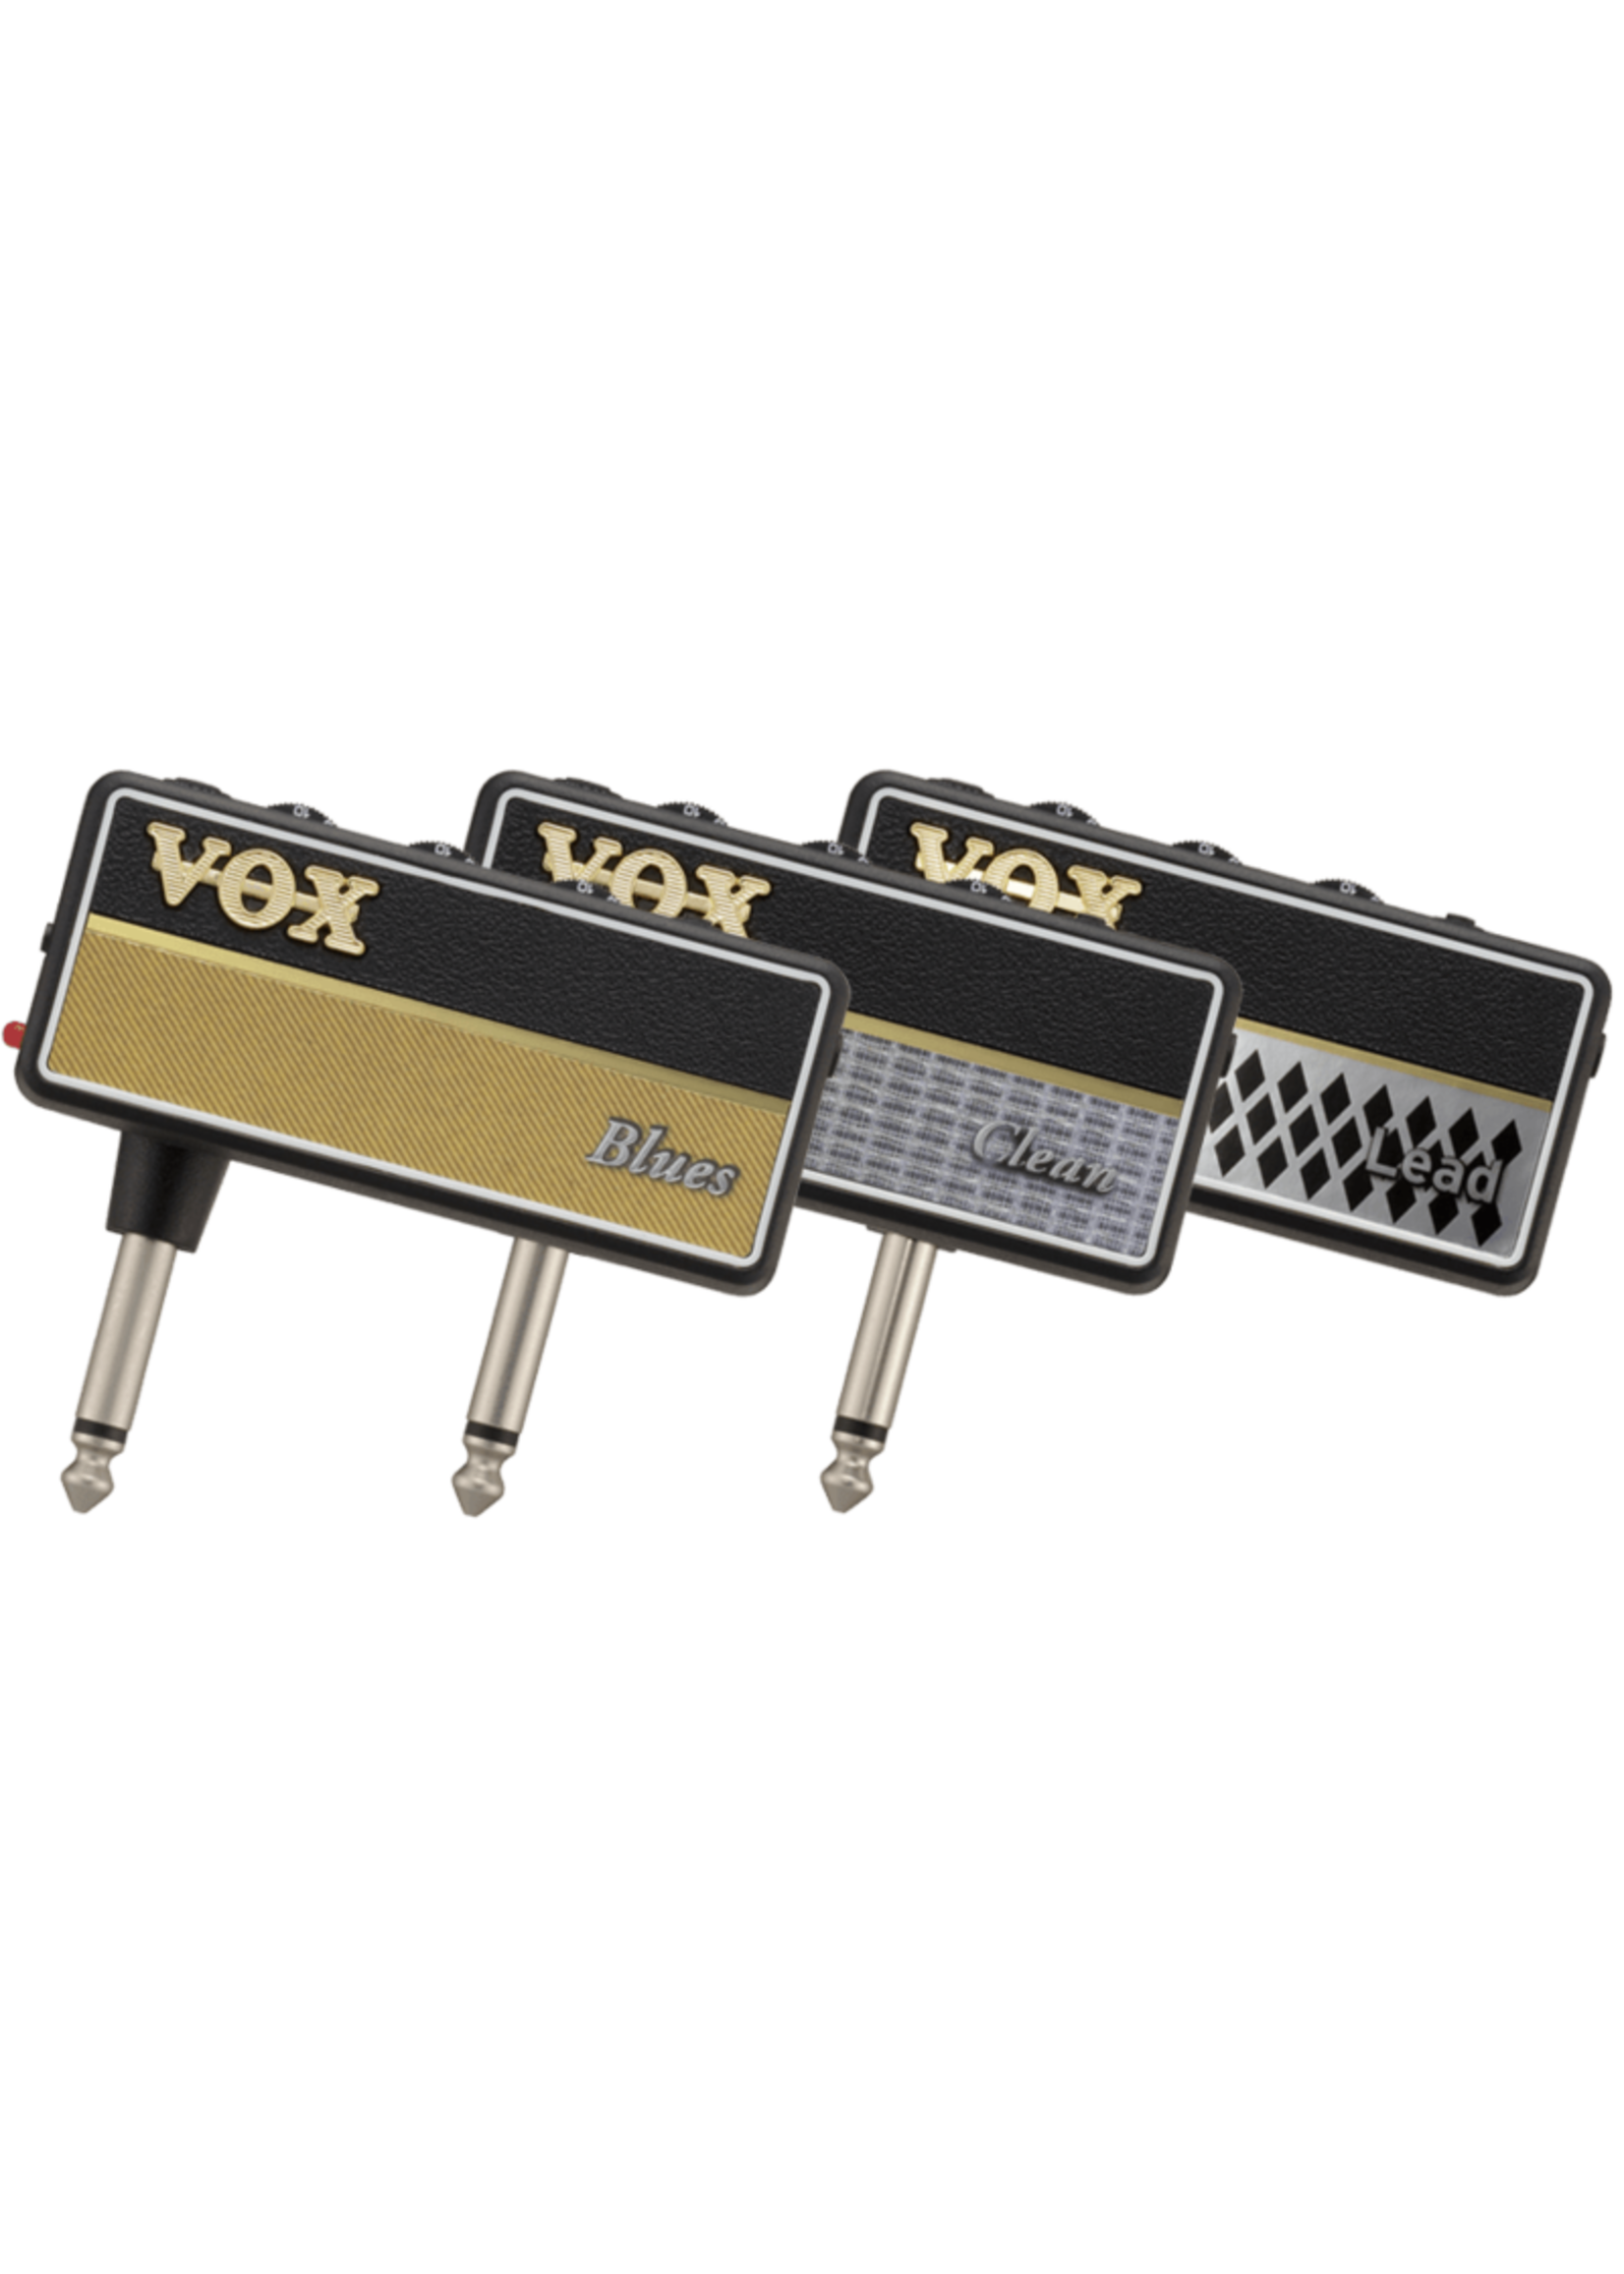 Vox Vox Amplug 2 Bass